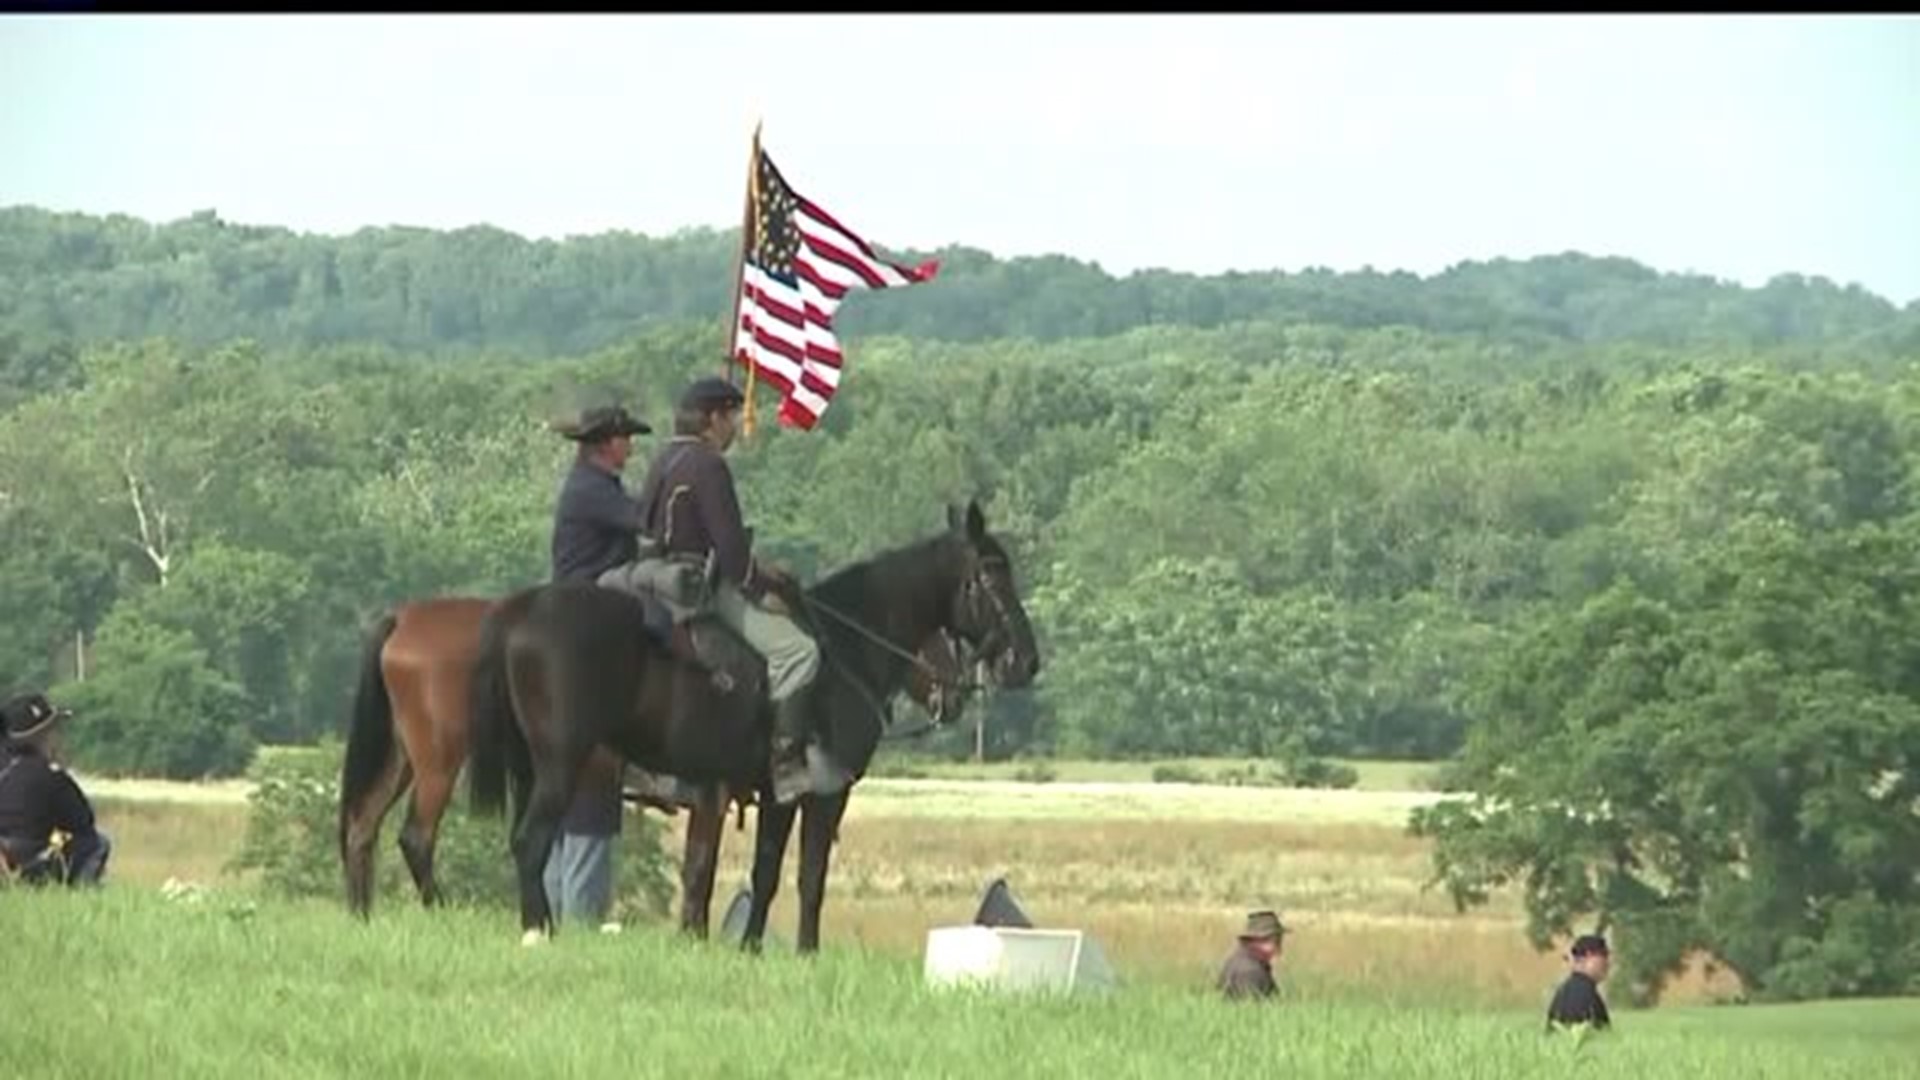 The Gettysburg reenactment from the eyes of the reenactors